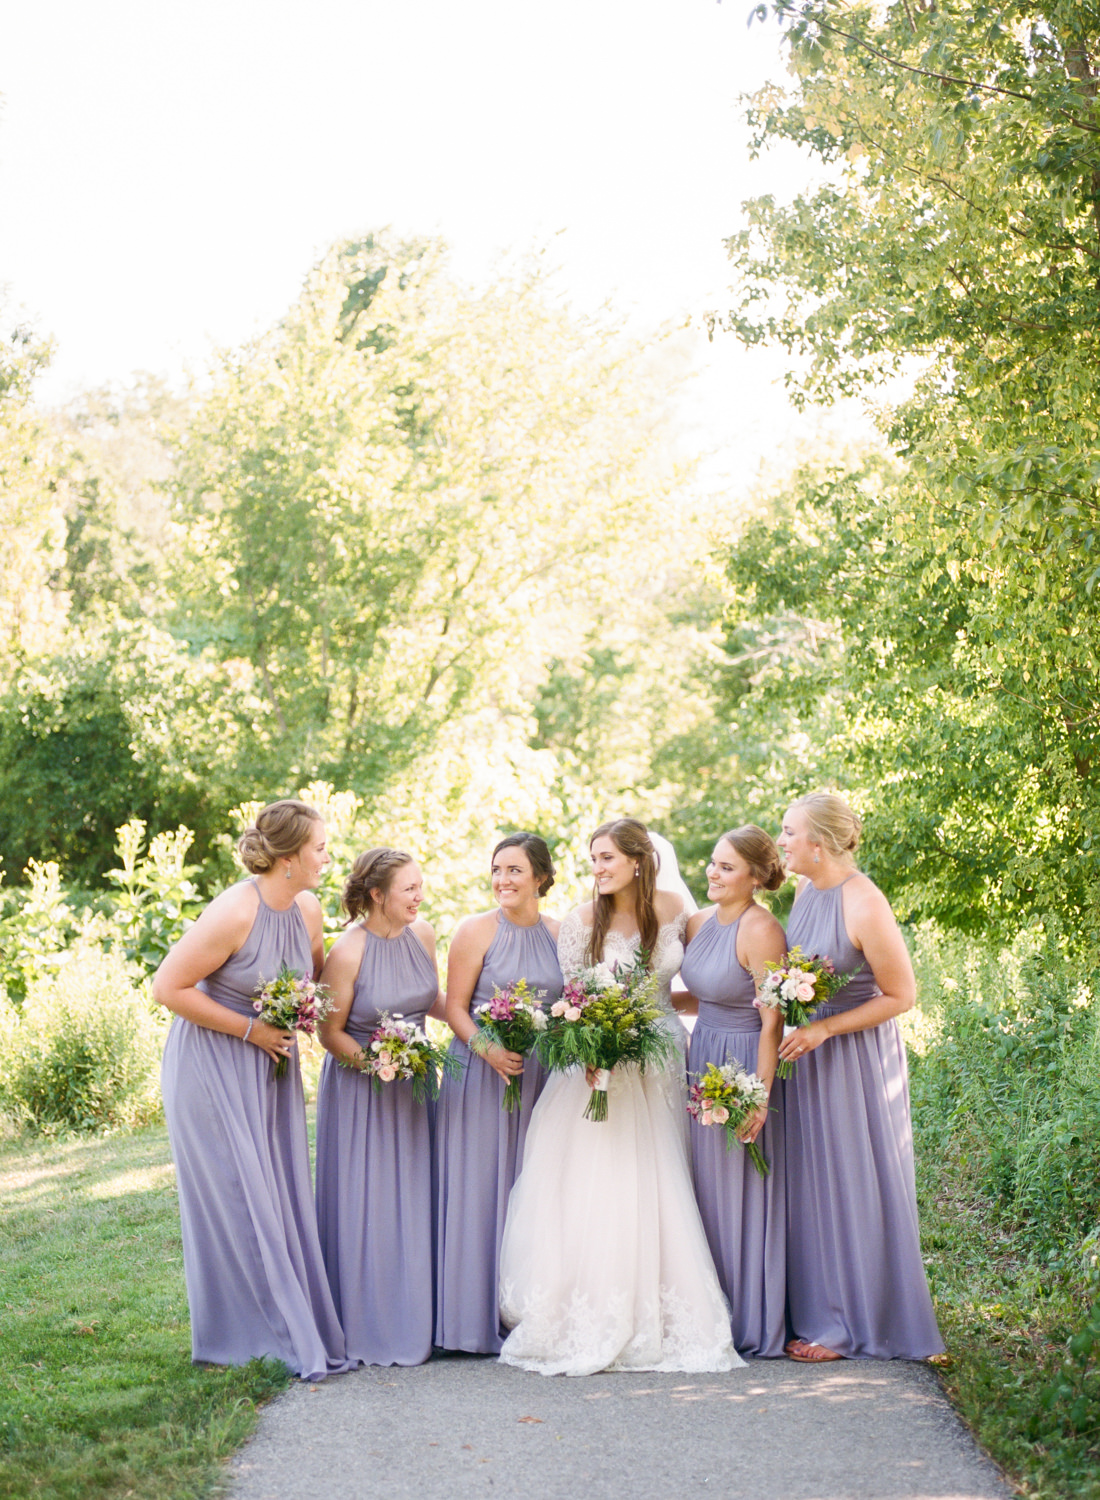 Bride and bridesmaids in lavender dresses; St. Louis fine art film wedding photographer Erica Robnett Photography